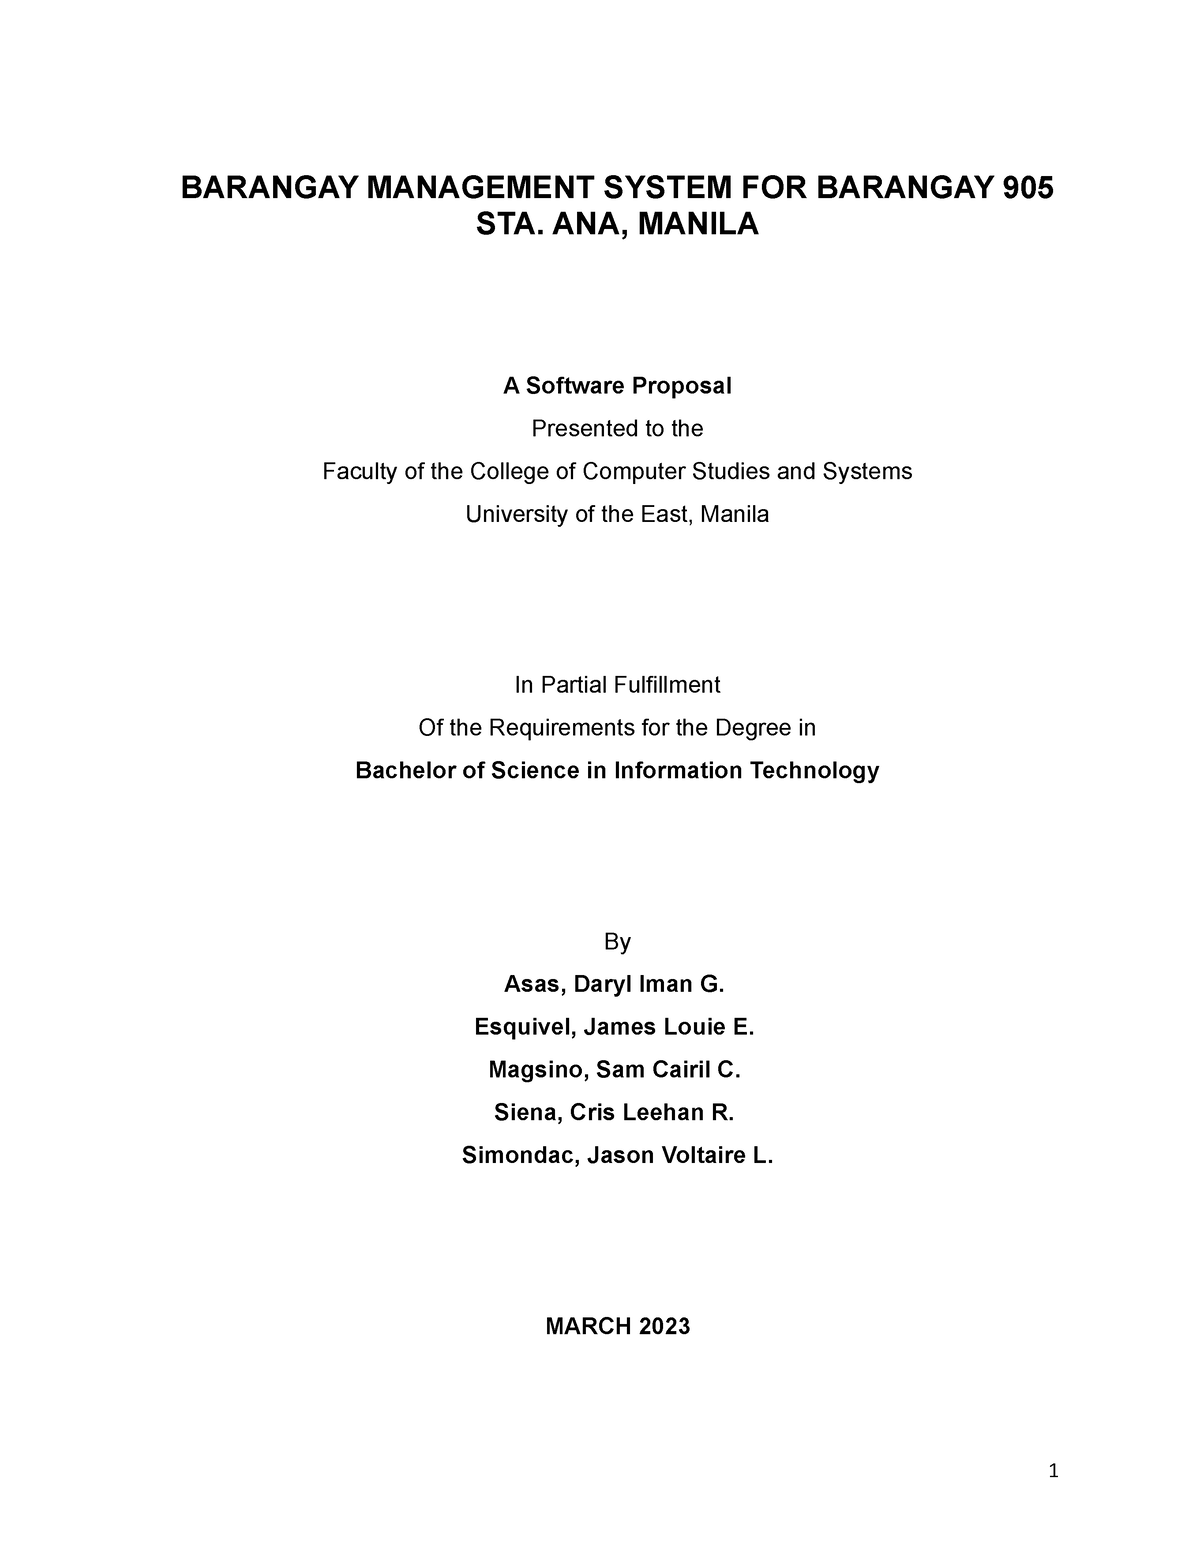 barangay management system thesis pdf